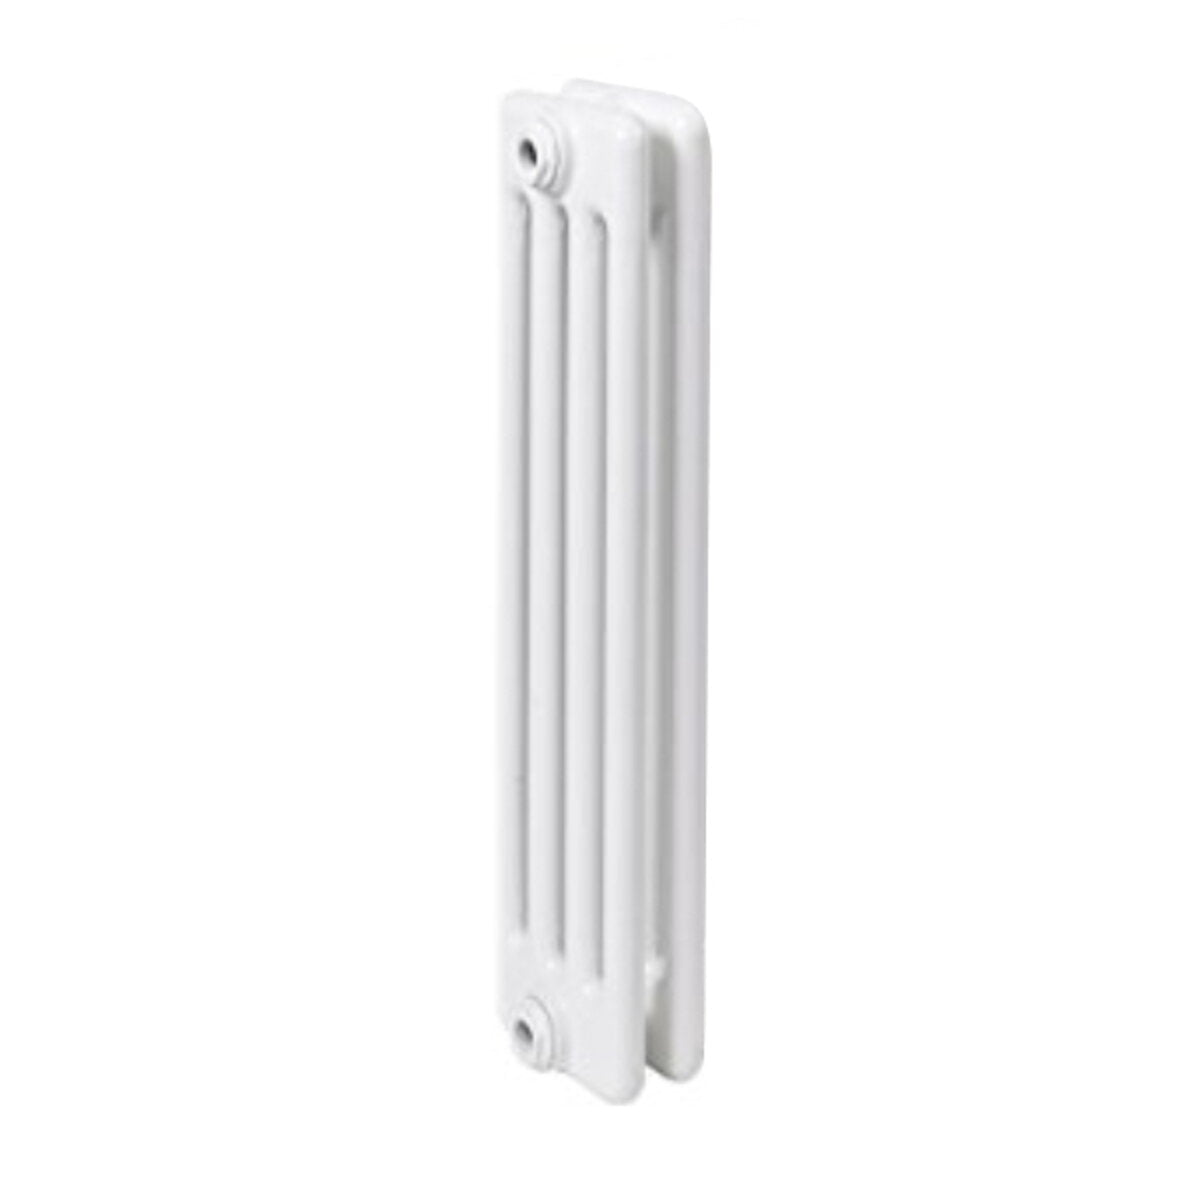 Ercos Comby steel column radiator 2 elements 4 columns center distance 1435 mm